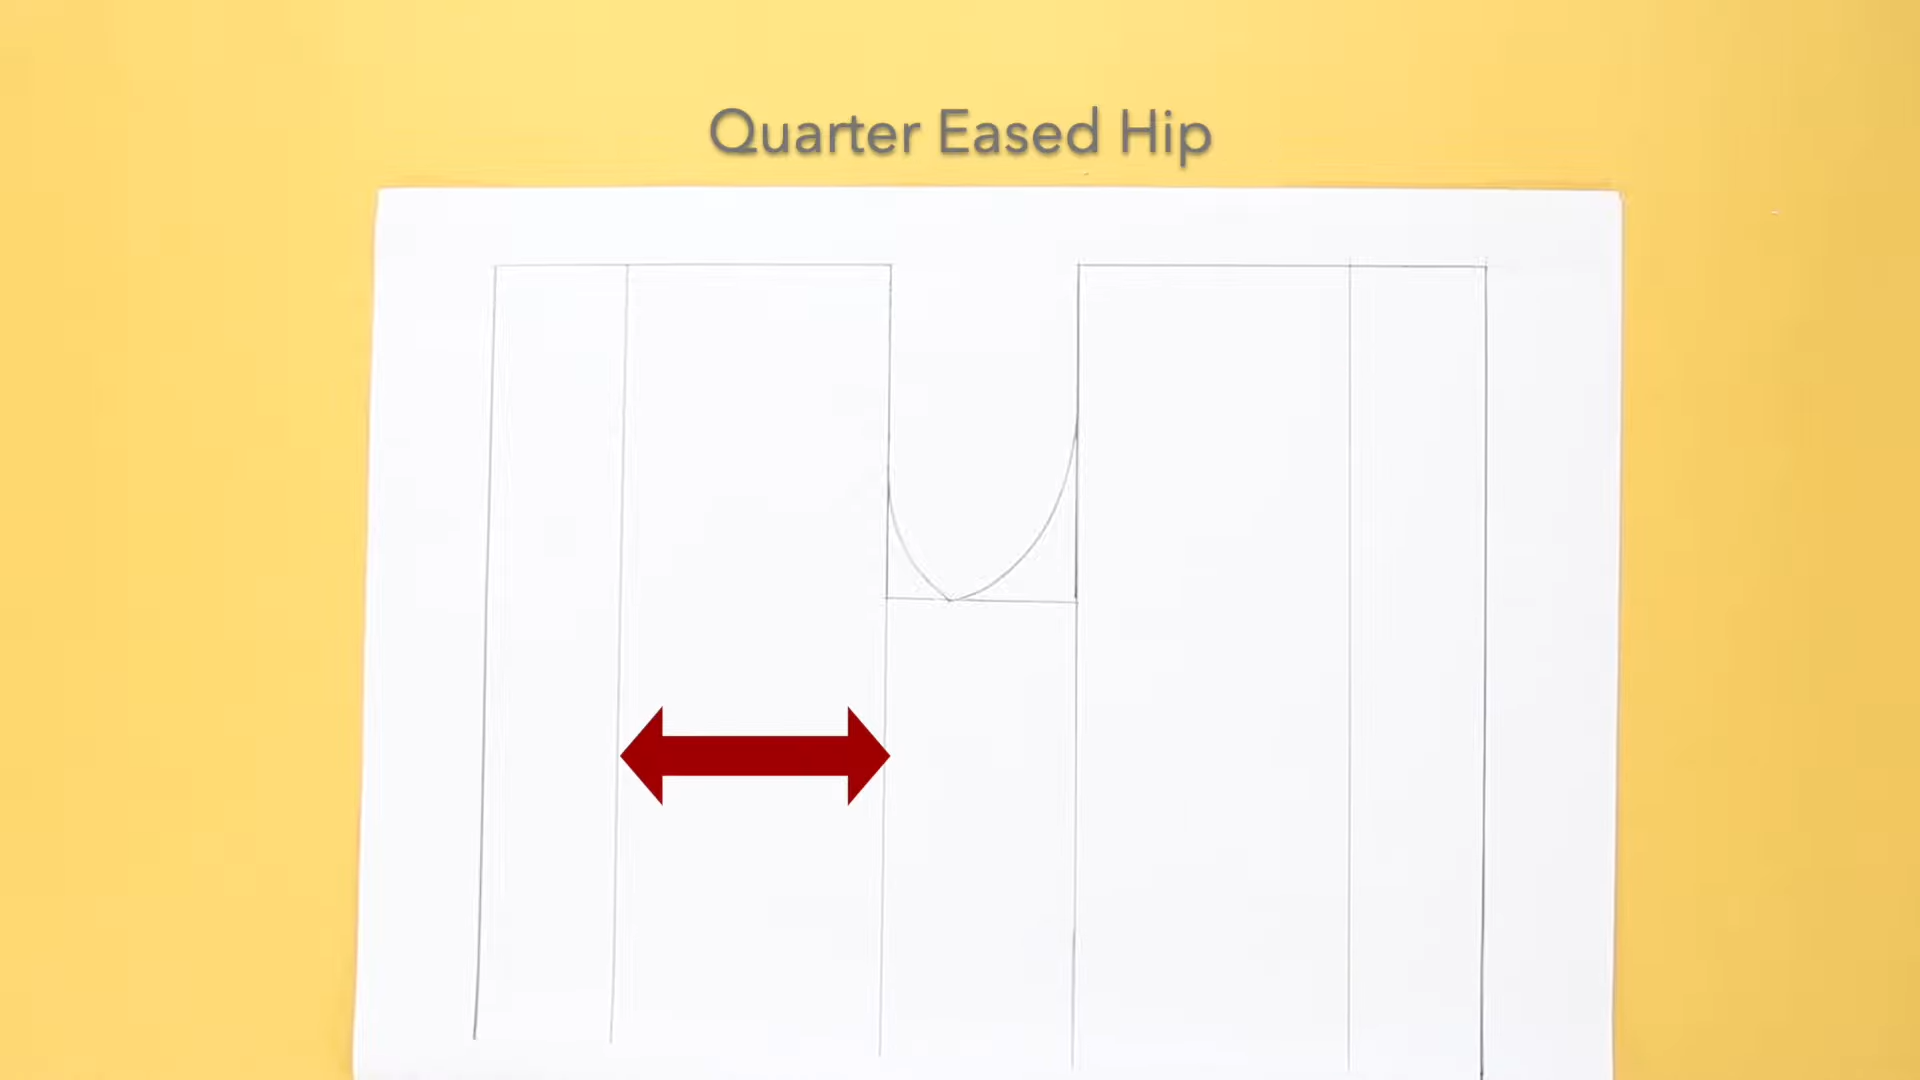 Quarter Eased Hip